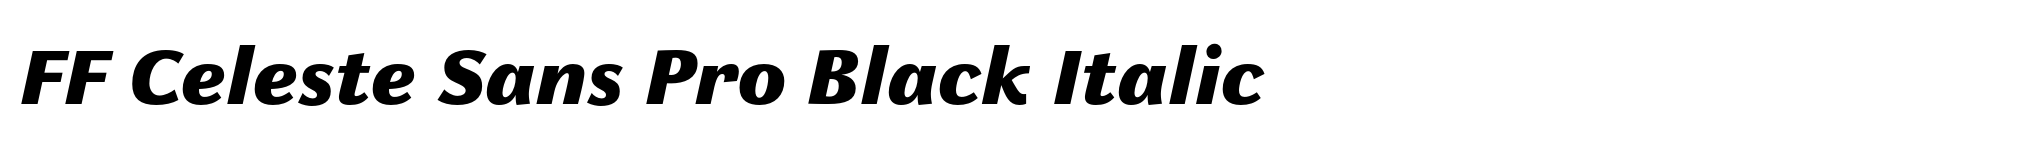 FF Celeste Sans Pro Black Italic image